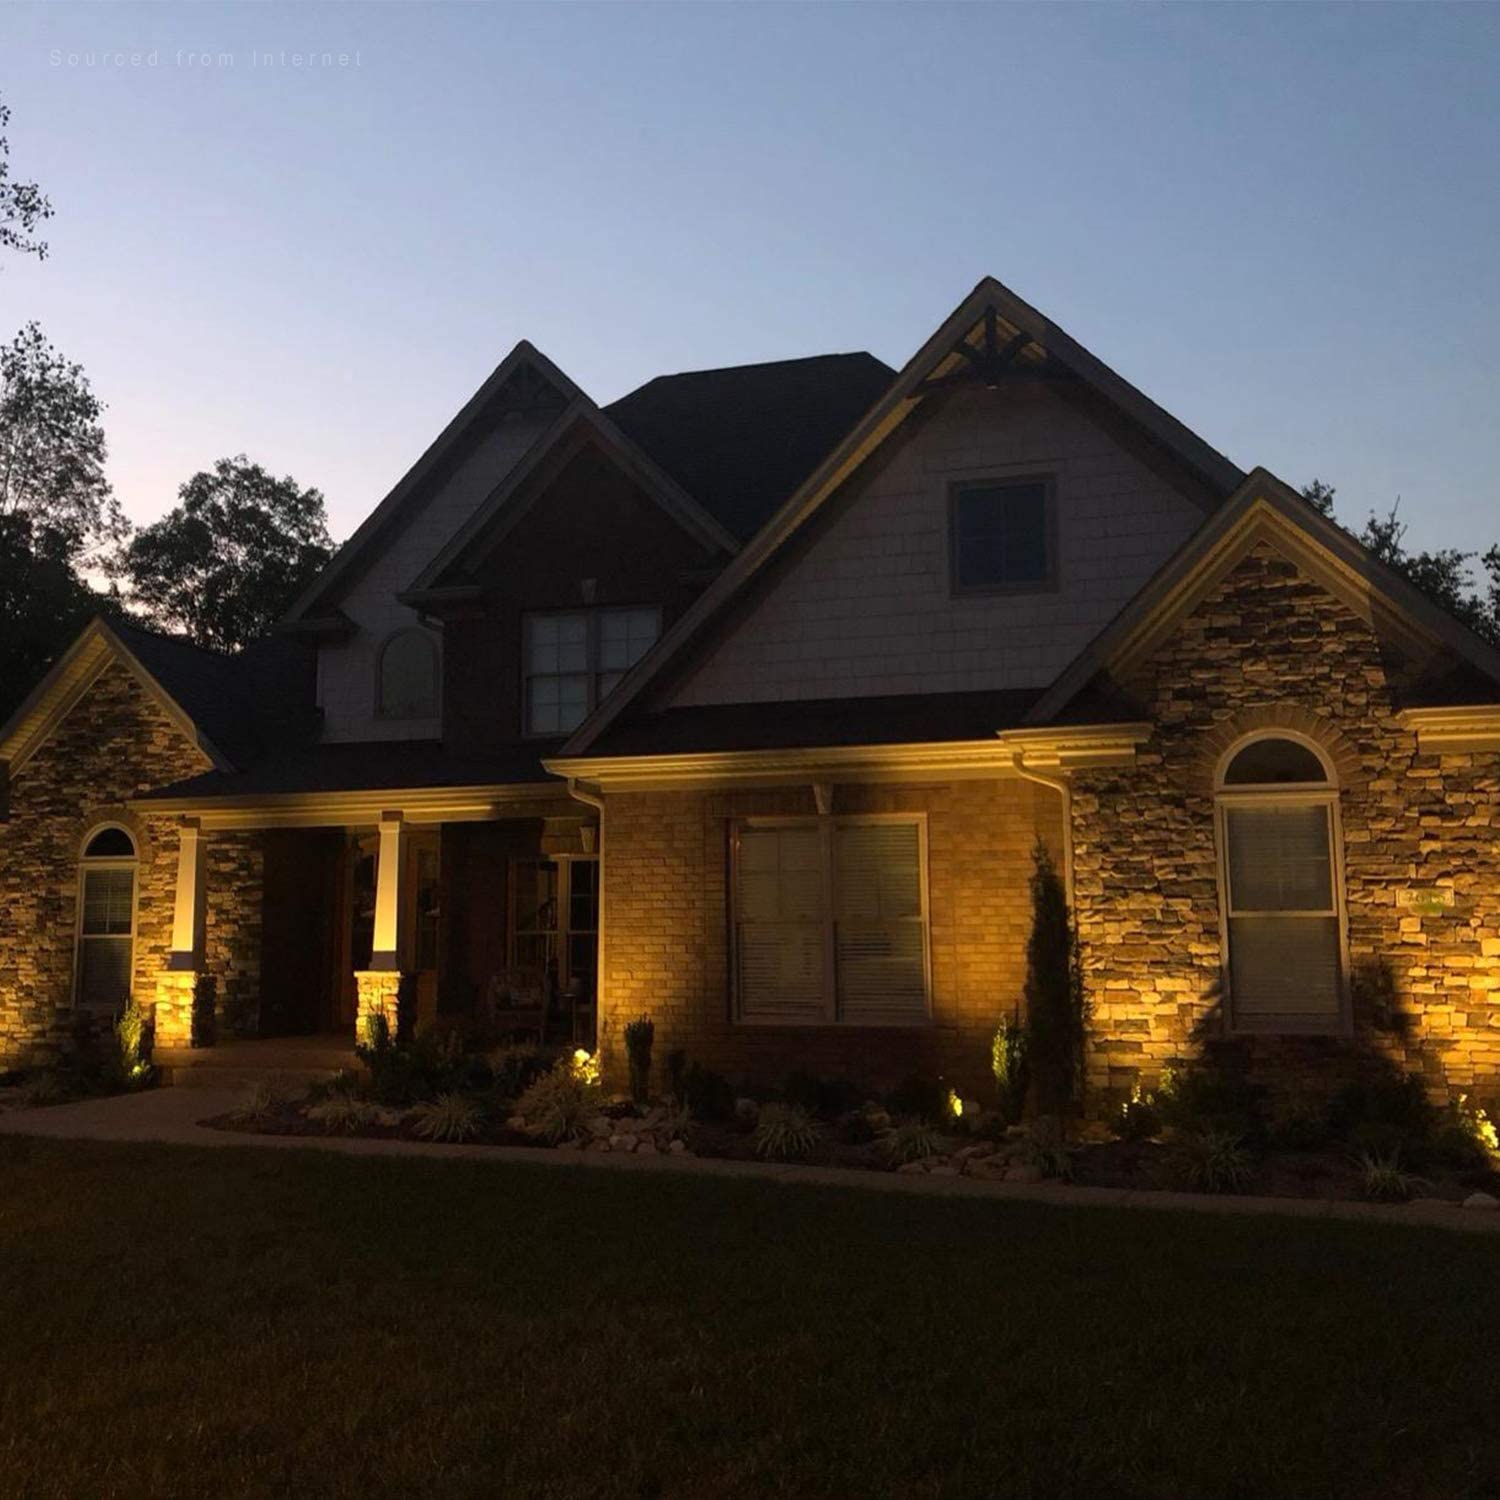 LEONLITE 8-Pack LED Outdoor Lawn Spotlight Light, 4W, CRI90+, IP65  Waterproofnbsp;Pathway Landscape Lighting Fixture, ETL Listed, for  Pathway, Garden,nbsp;Yard, 3000K Warm White